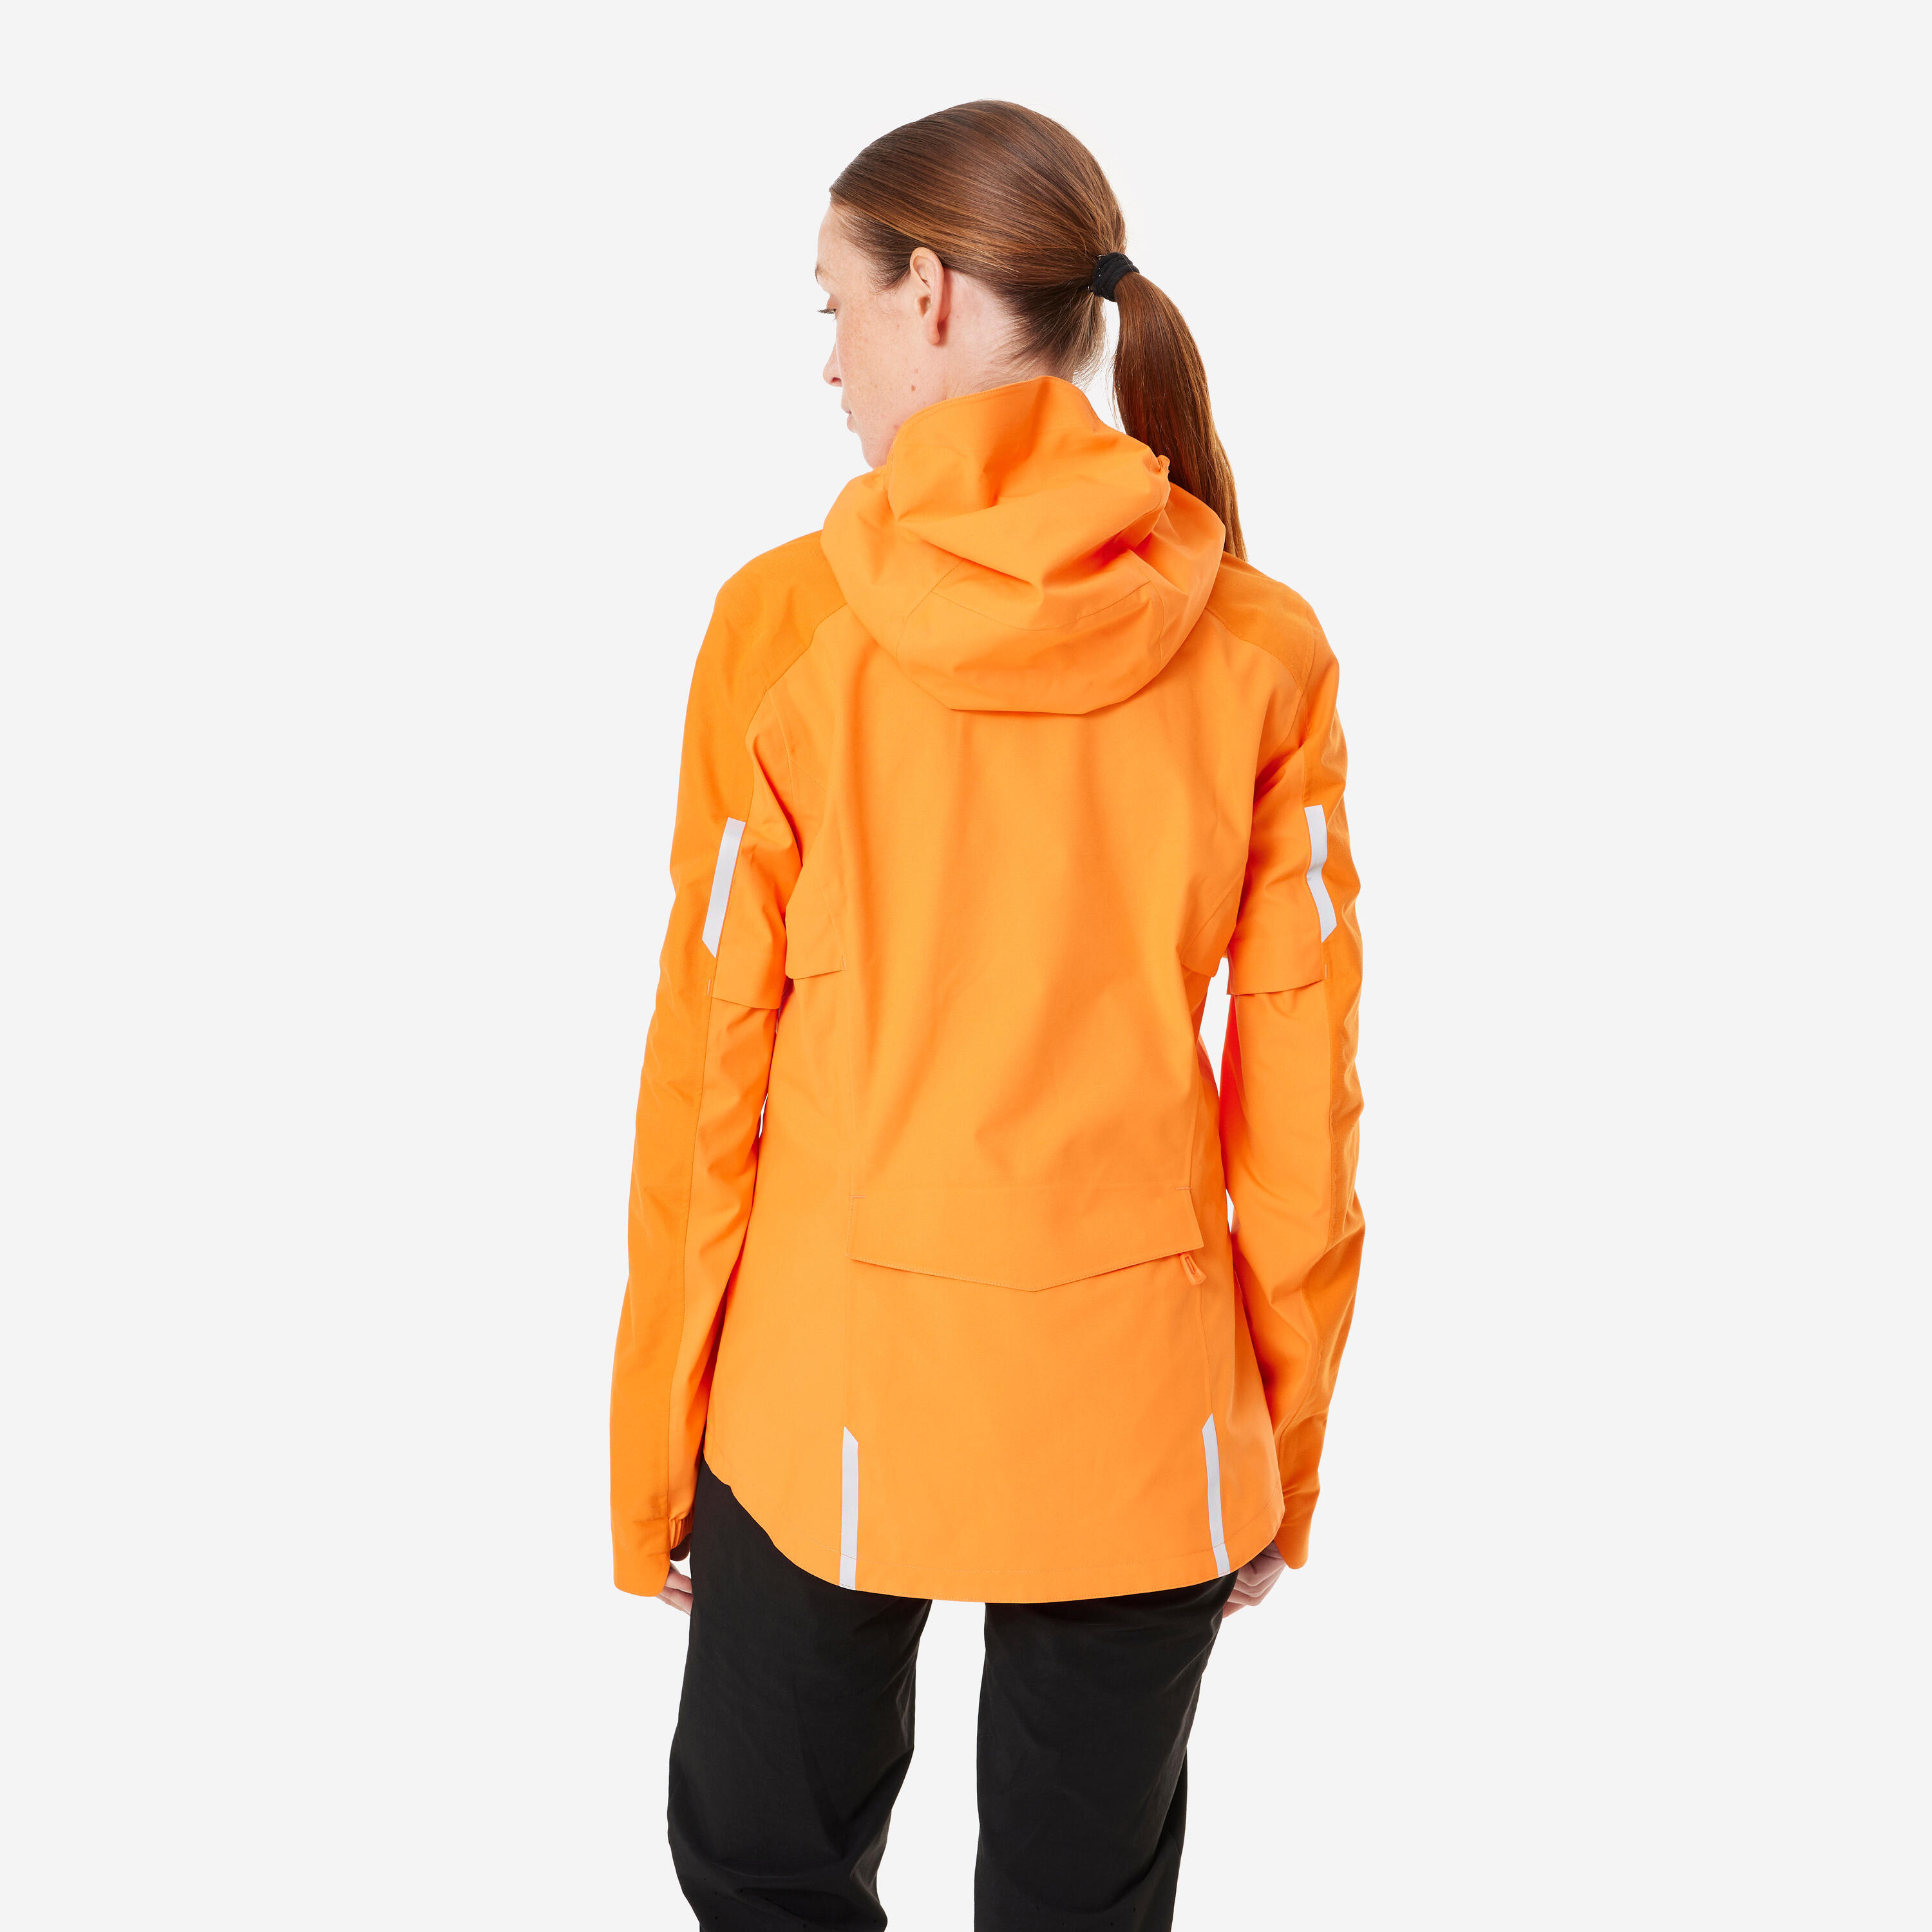 Women's Mountain Biking Rainproof Jacket - Orange 3/10